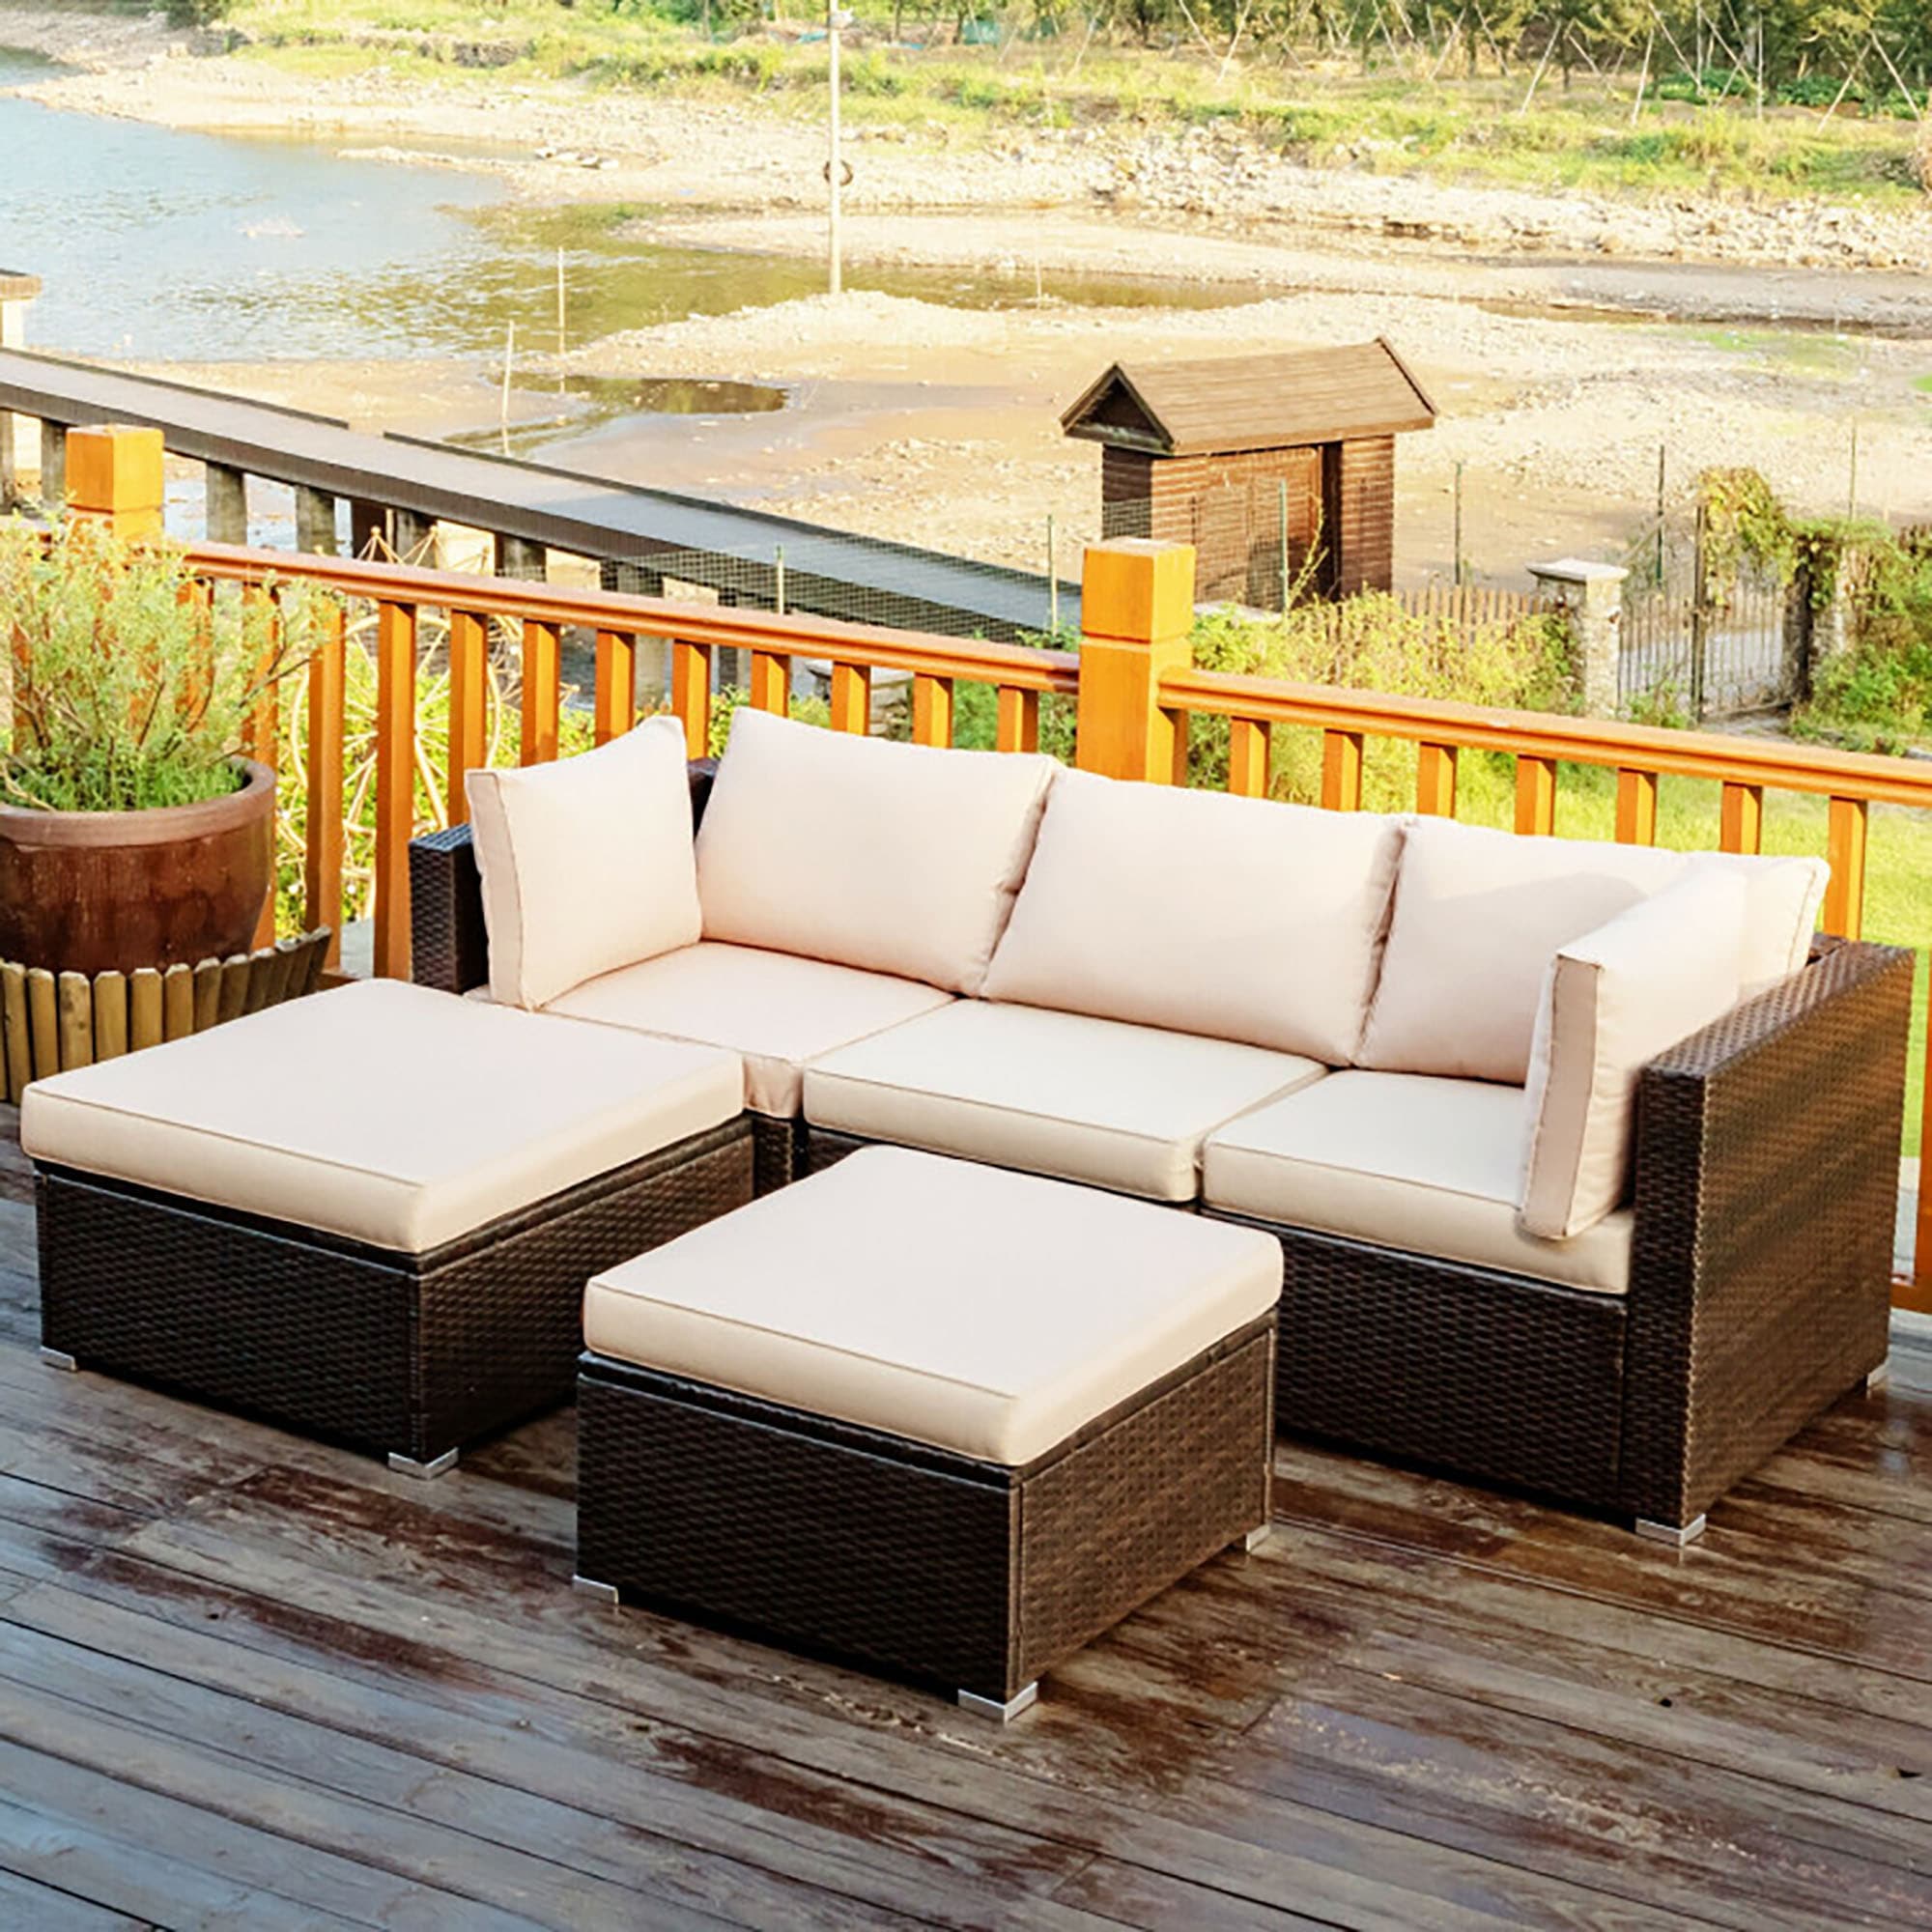 casainc outdoor furniture-set 5-piece rattan patio conversation